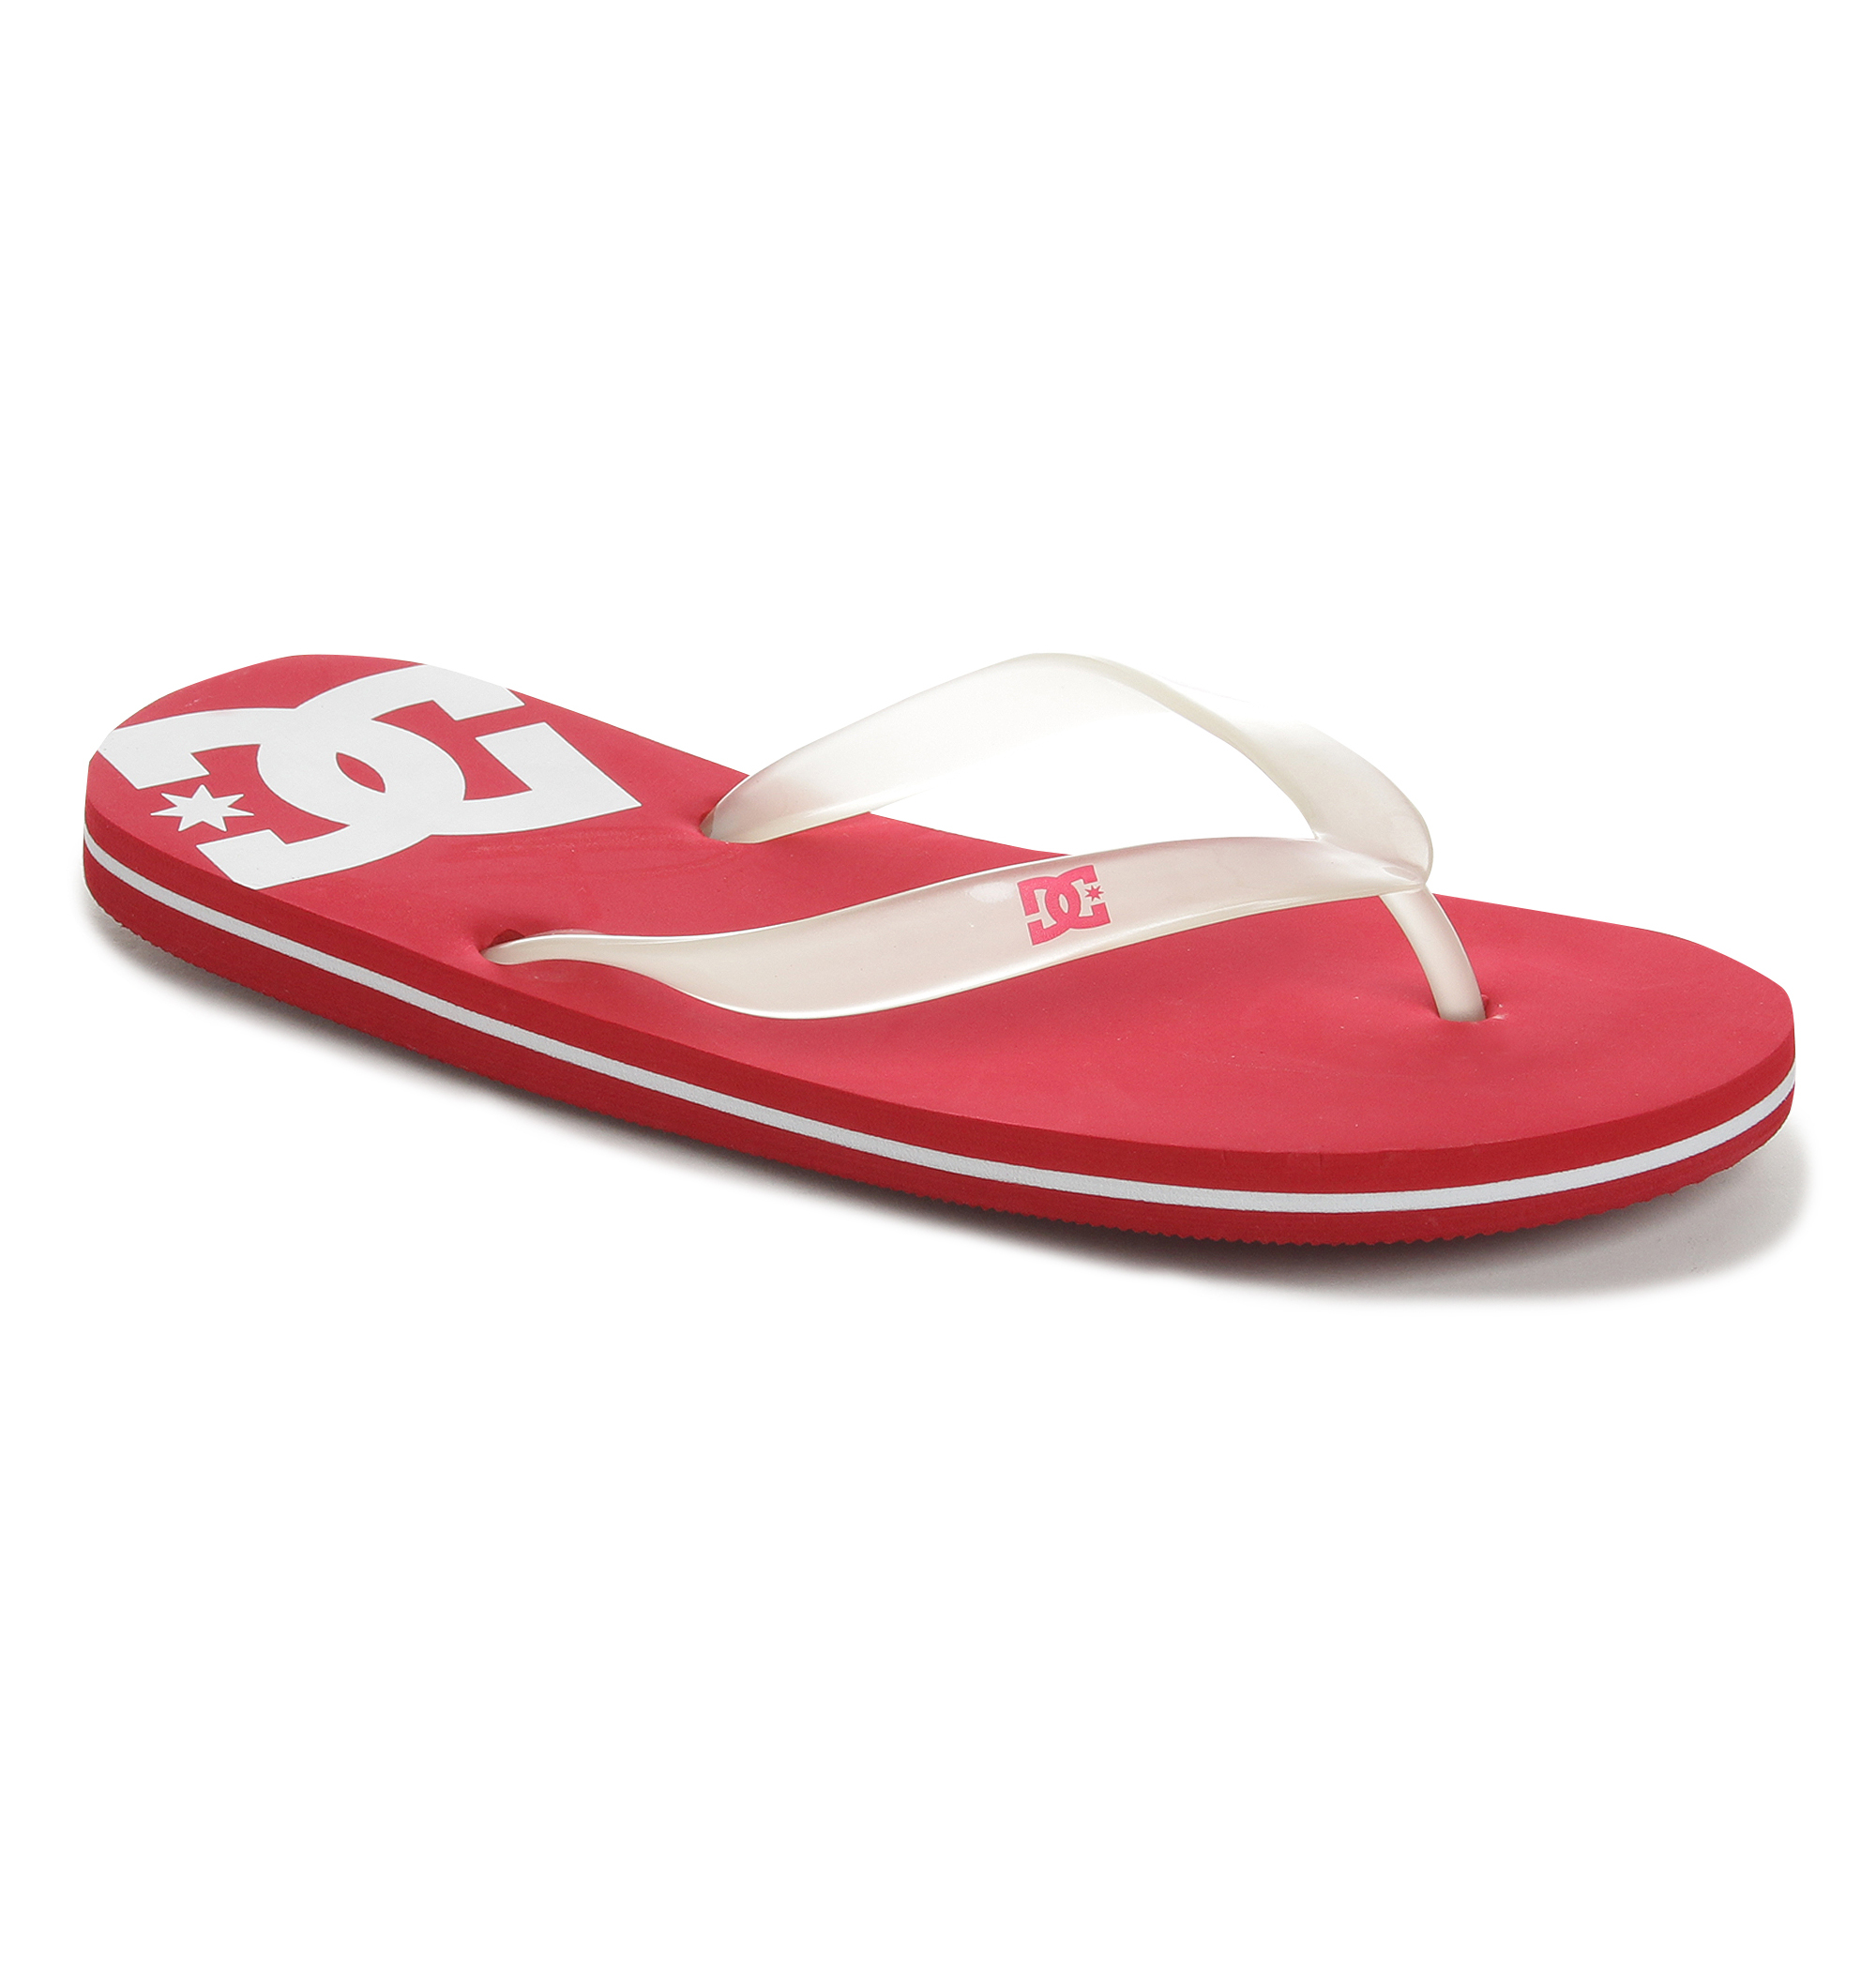 ＜DC Shoe＞ SPRAY GITD 大きく配したブランドロゴが存在感溢れるビーチサンダル画像